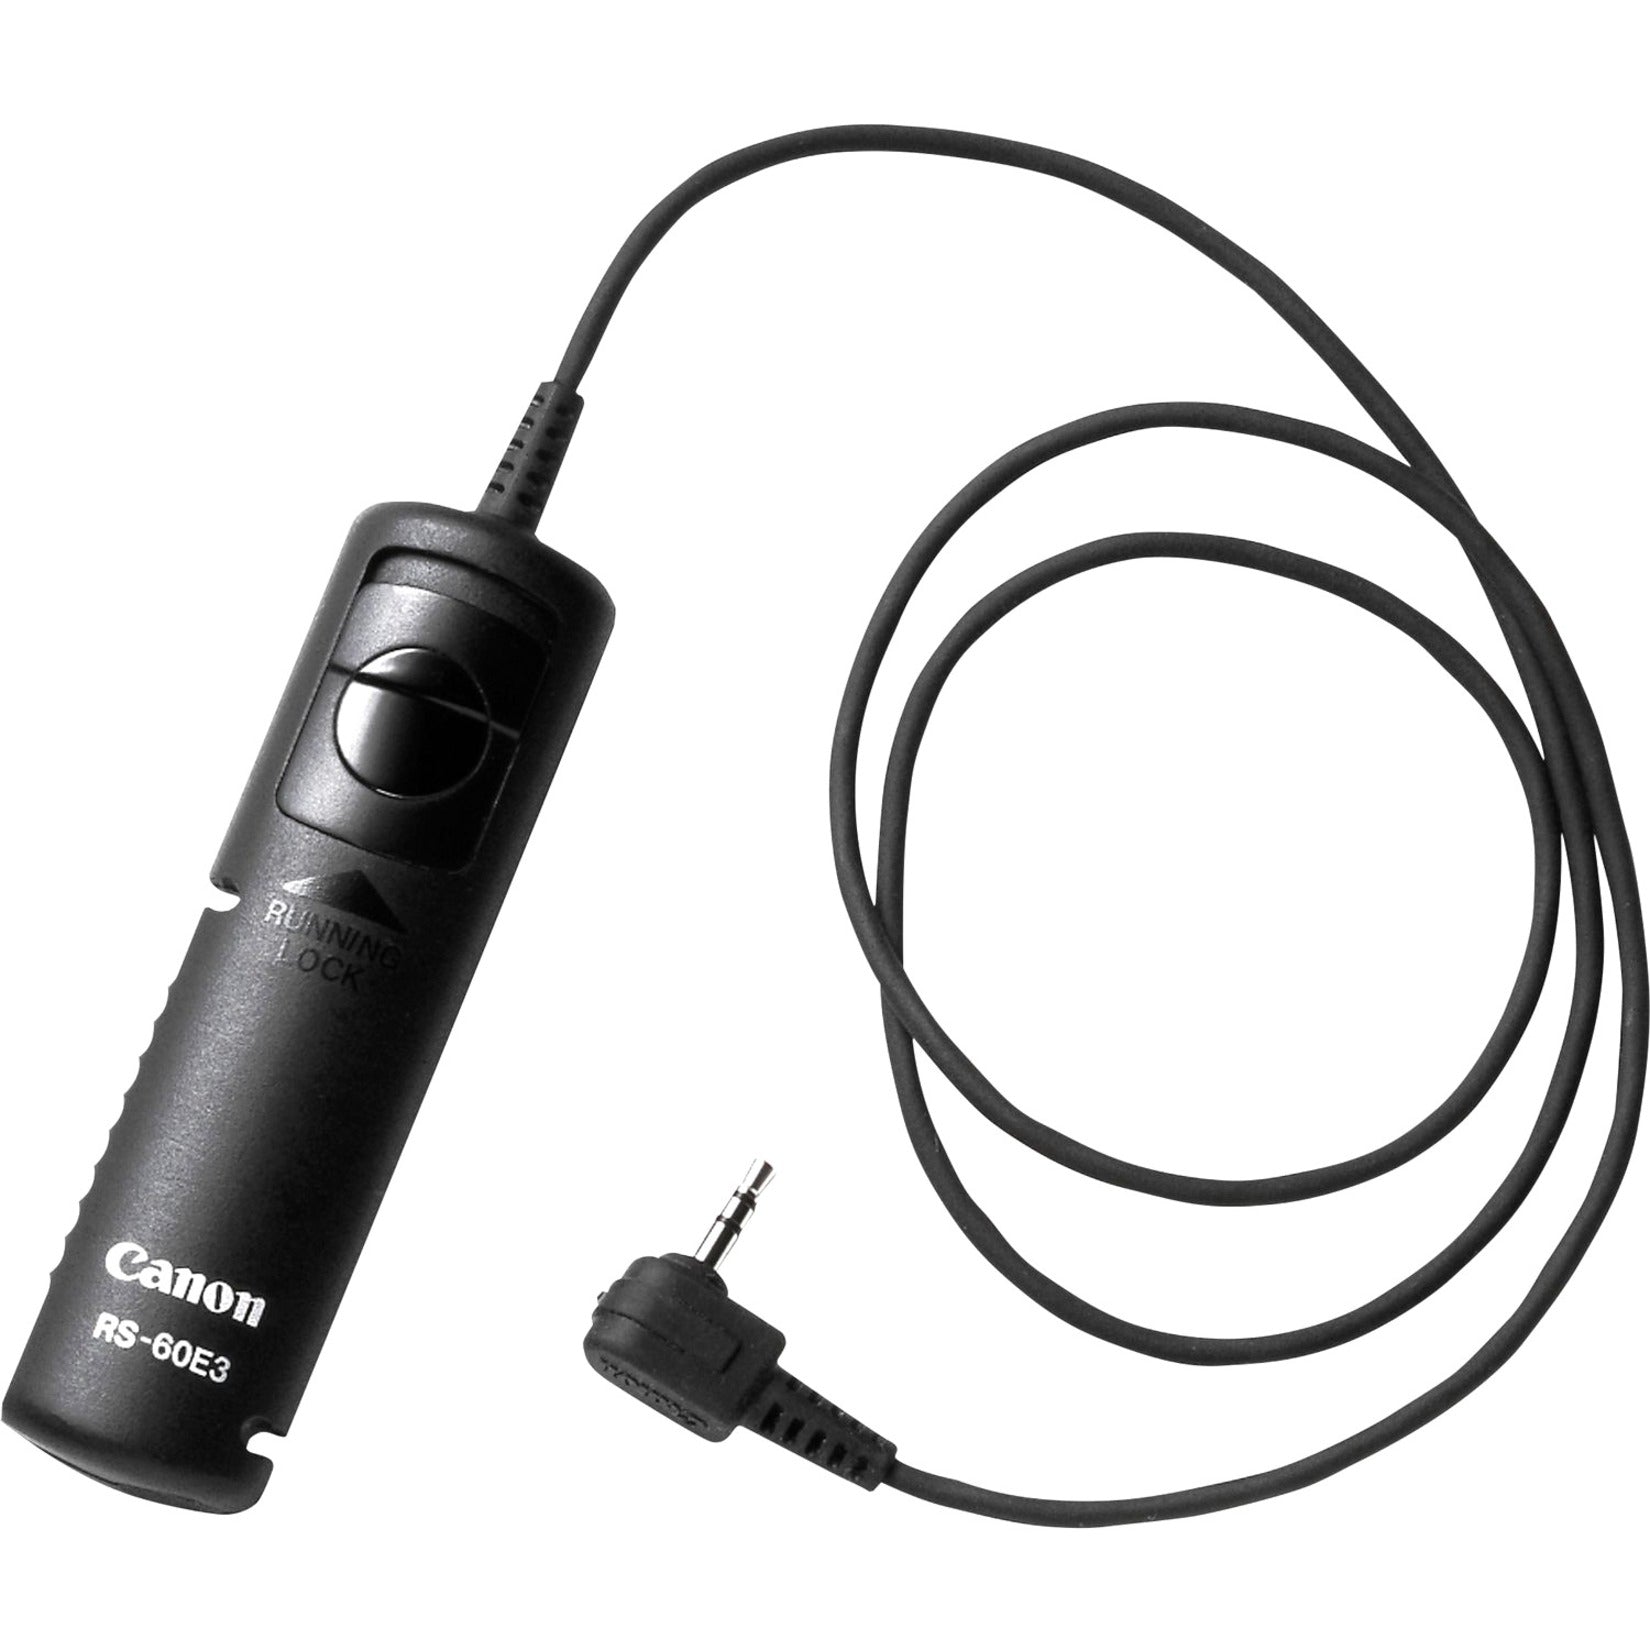 Canon 2469A002 RS-60E3 Remote - Digital Camera, 2 ft Cable Length